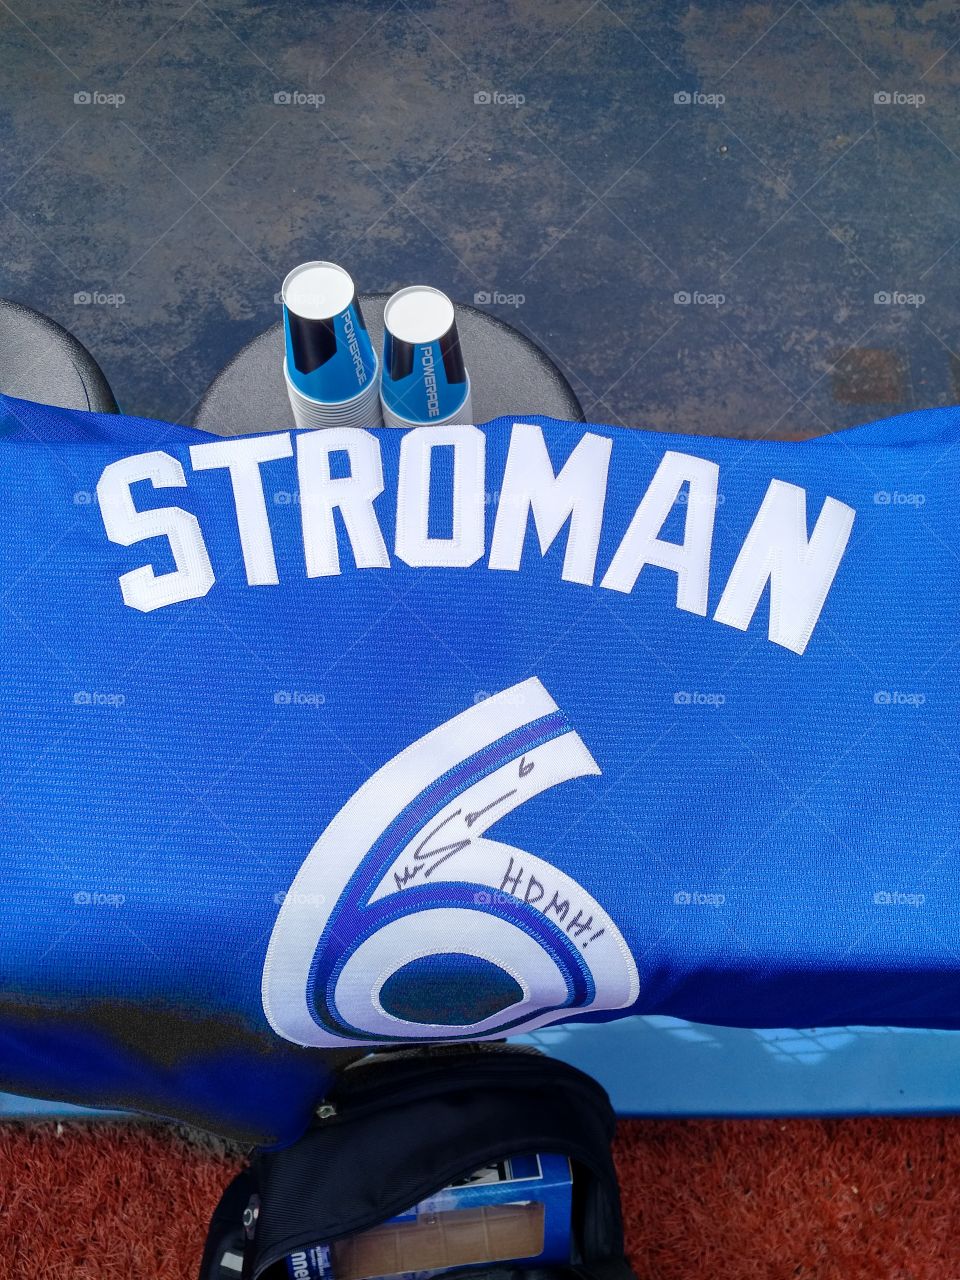 Stroman Autographed jersey